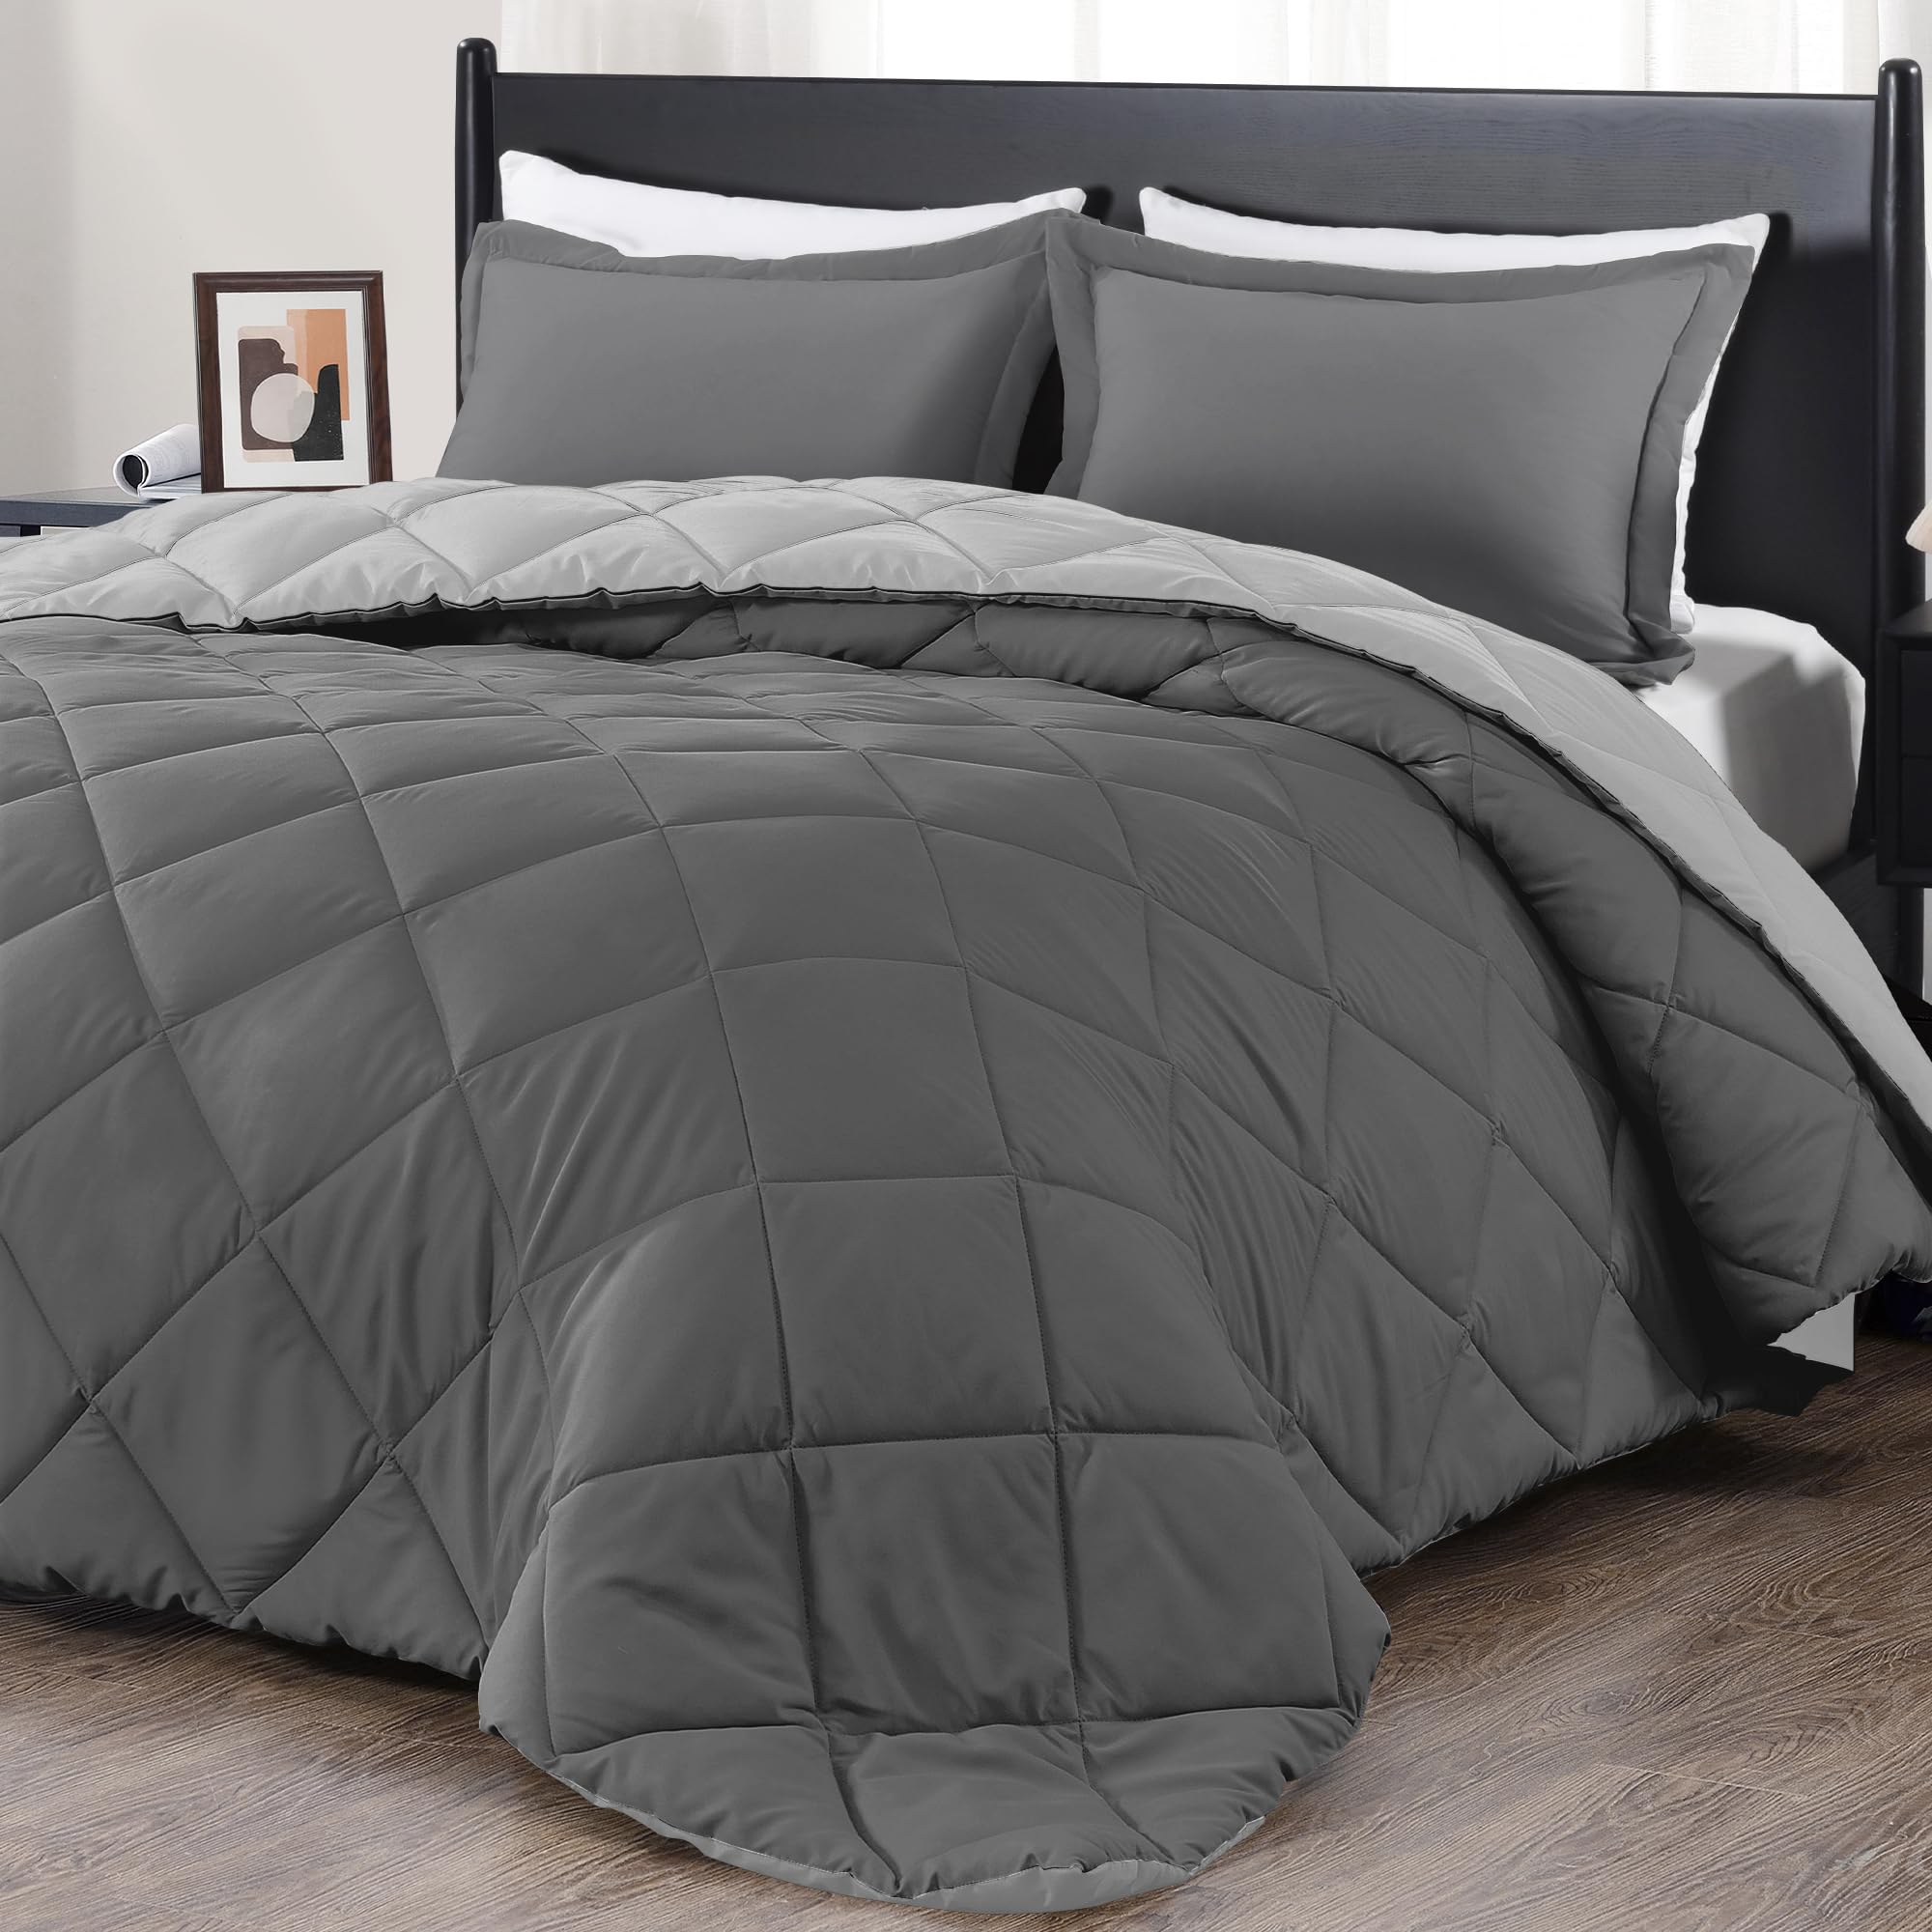 downluxe King Size Comforter Set - Charcoal and Grey King Comforter, Soft Bedding Comforter Sets for All Seasons, King Comforter